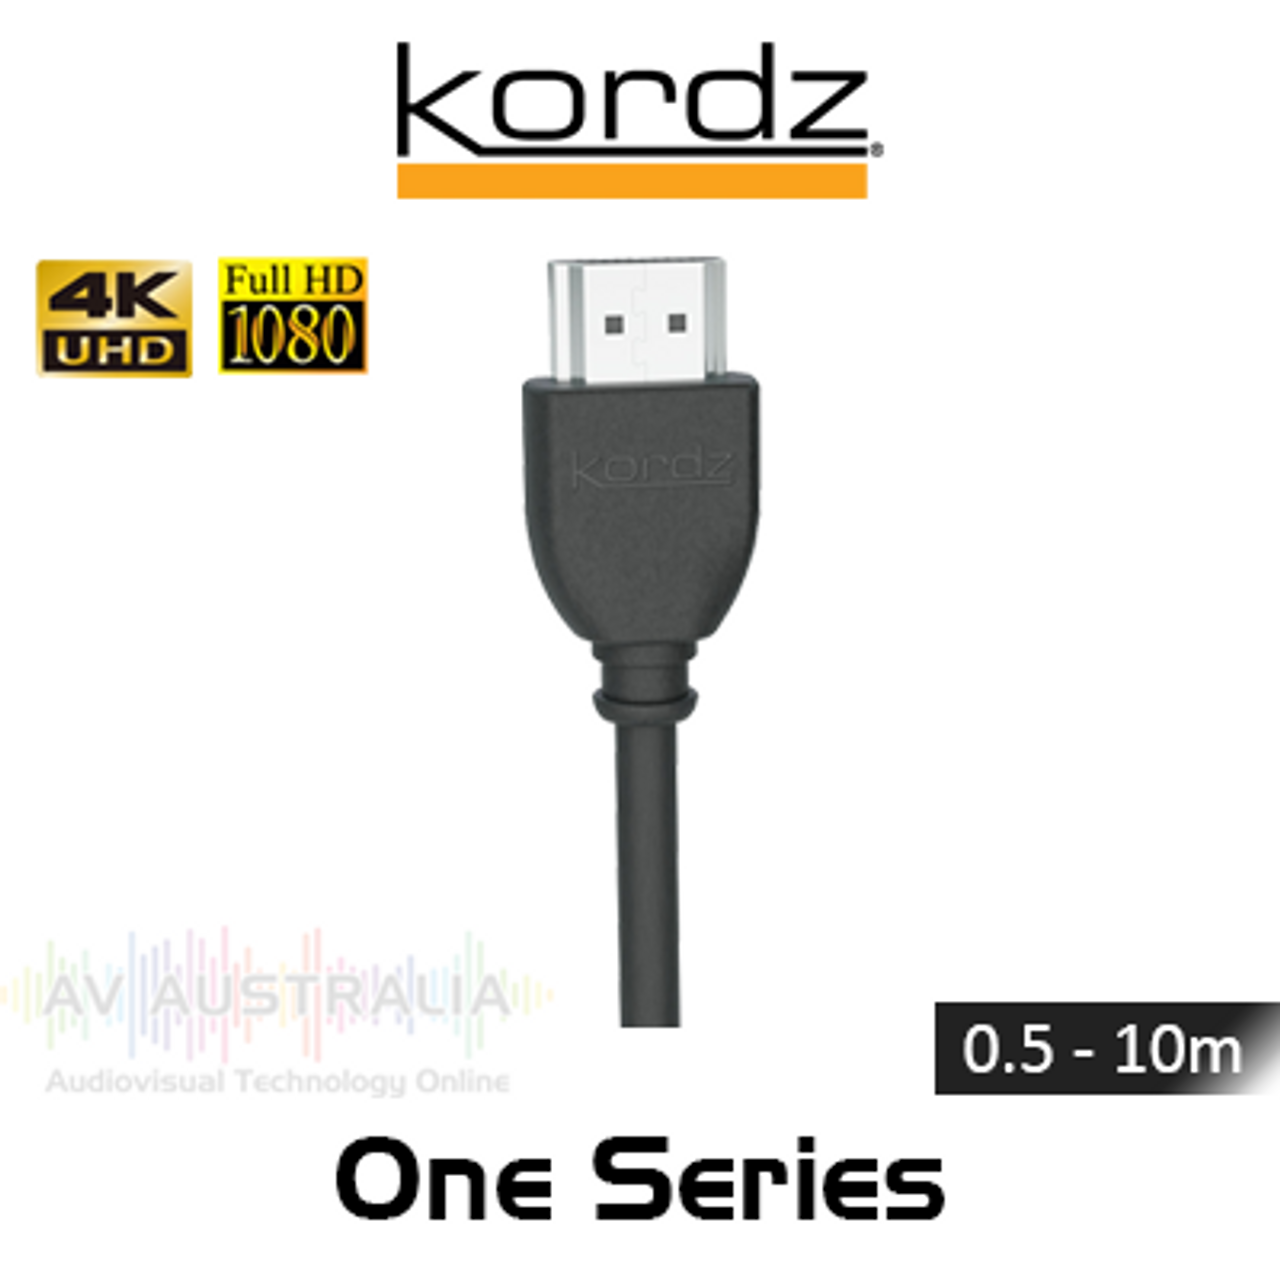 Kordz One Series 4K30 UHD / 1080p HDMI Cables (0.5 - 10m)